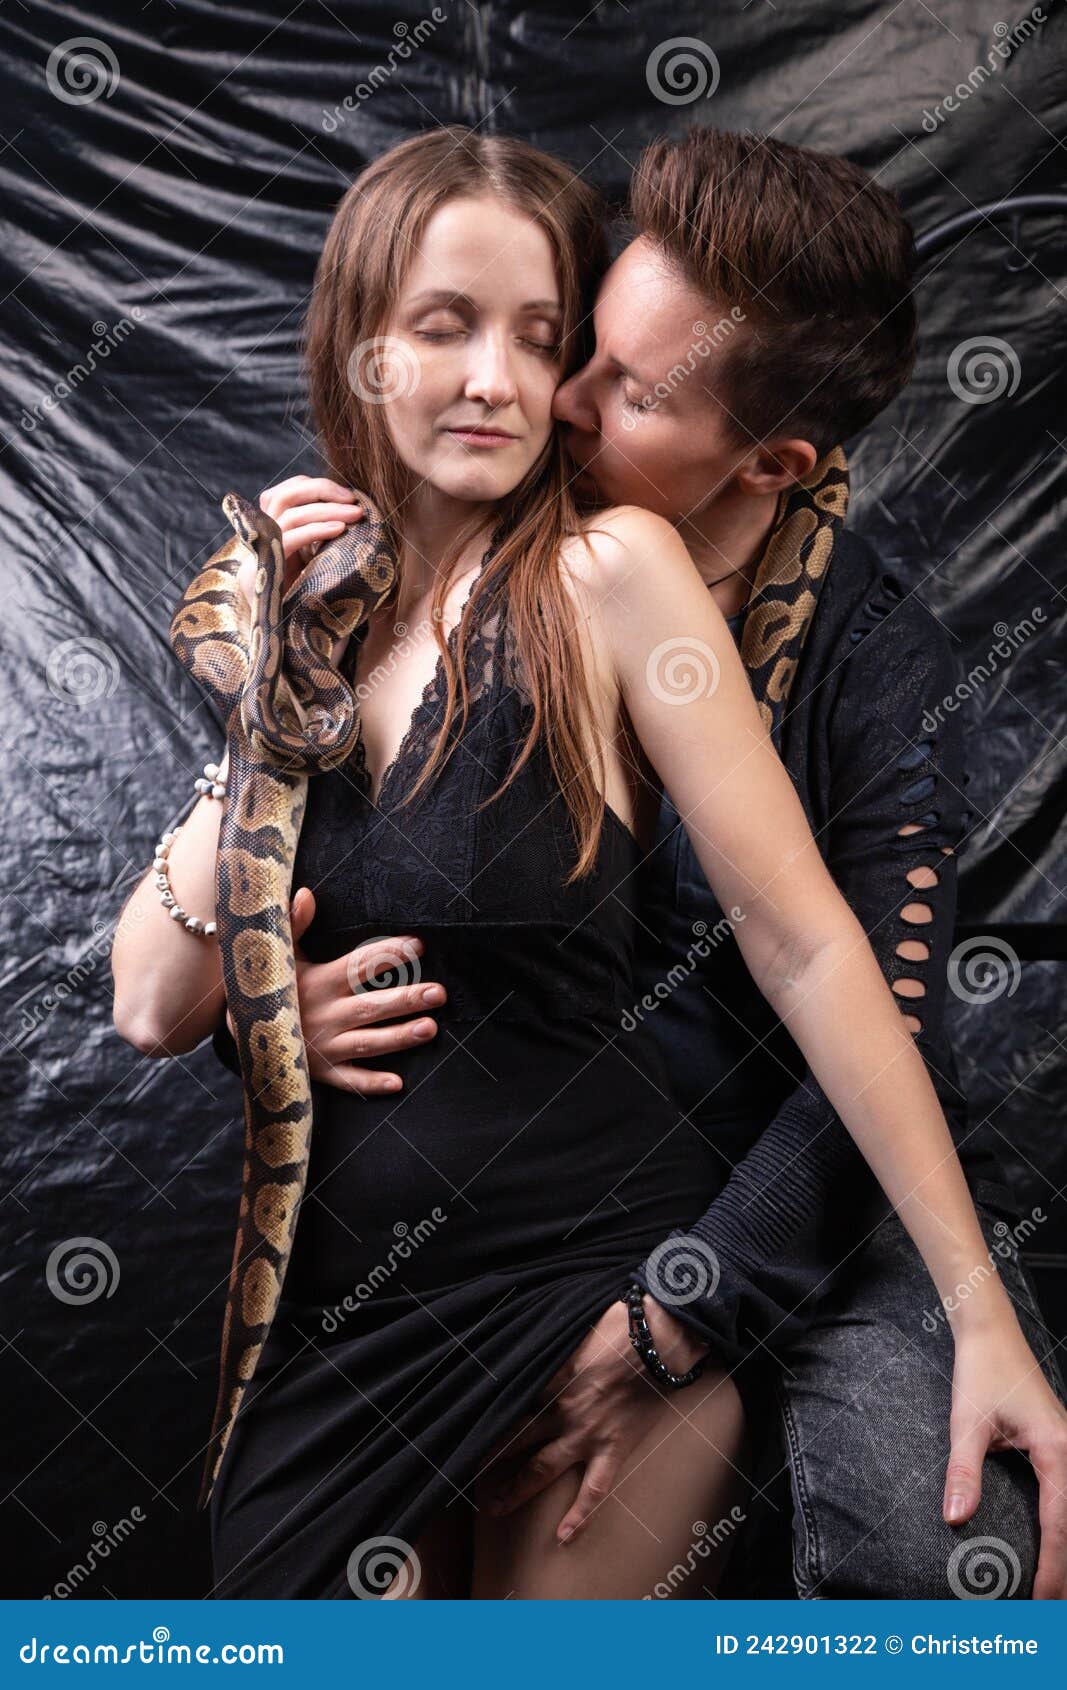 chris benham recommends Kiss The Girls Snake